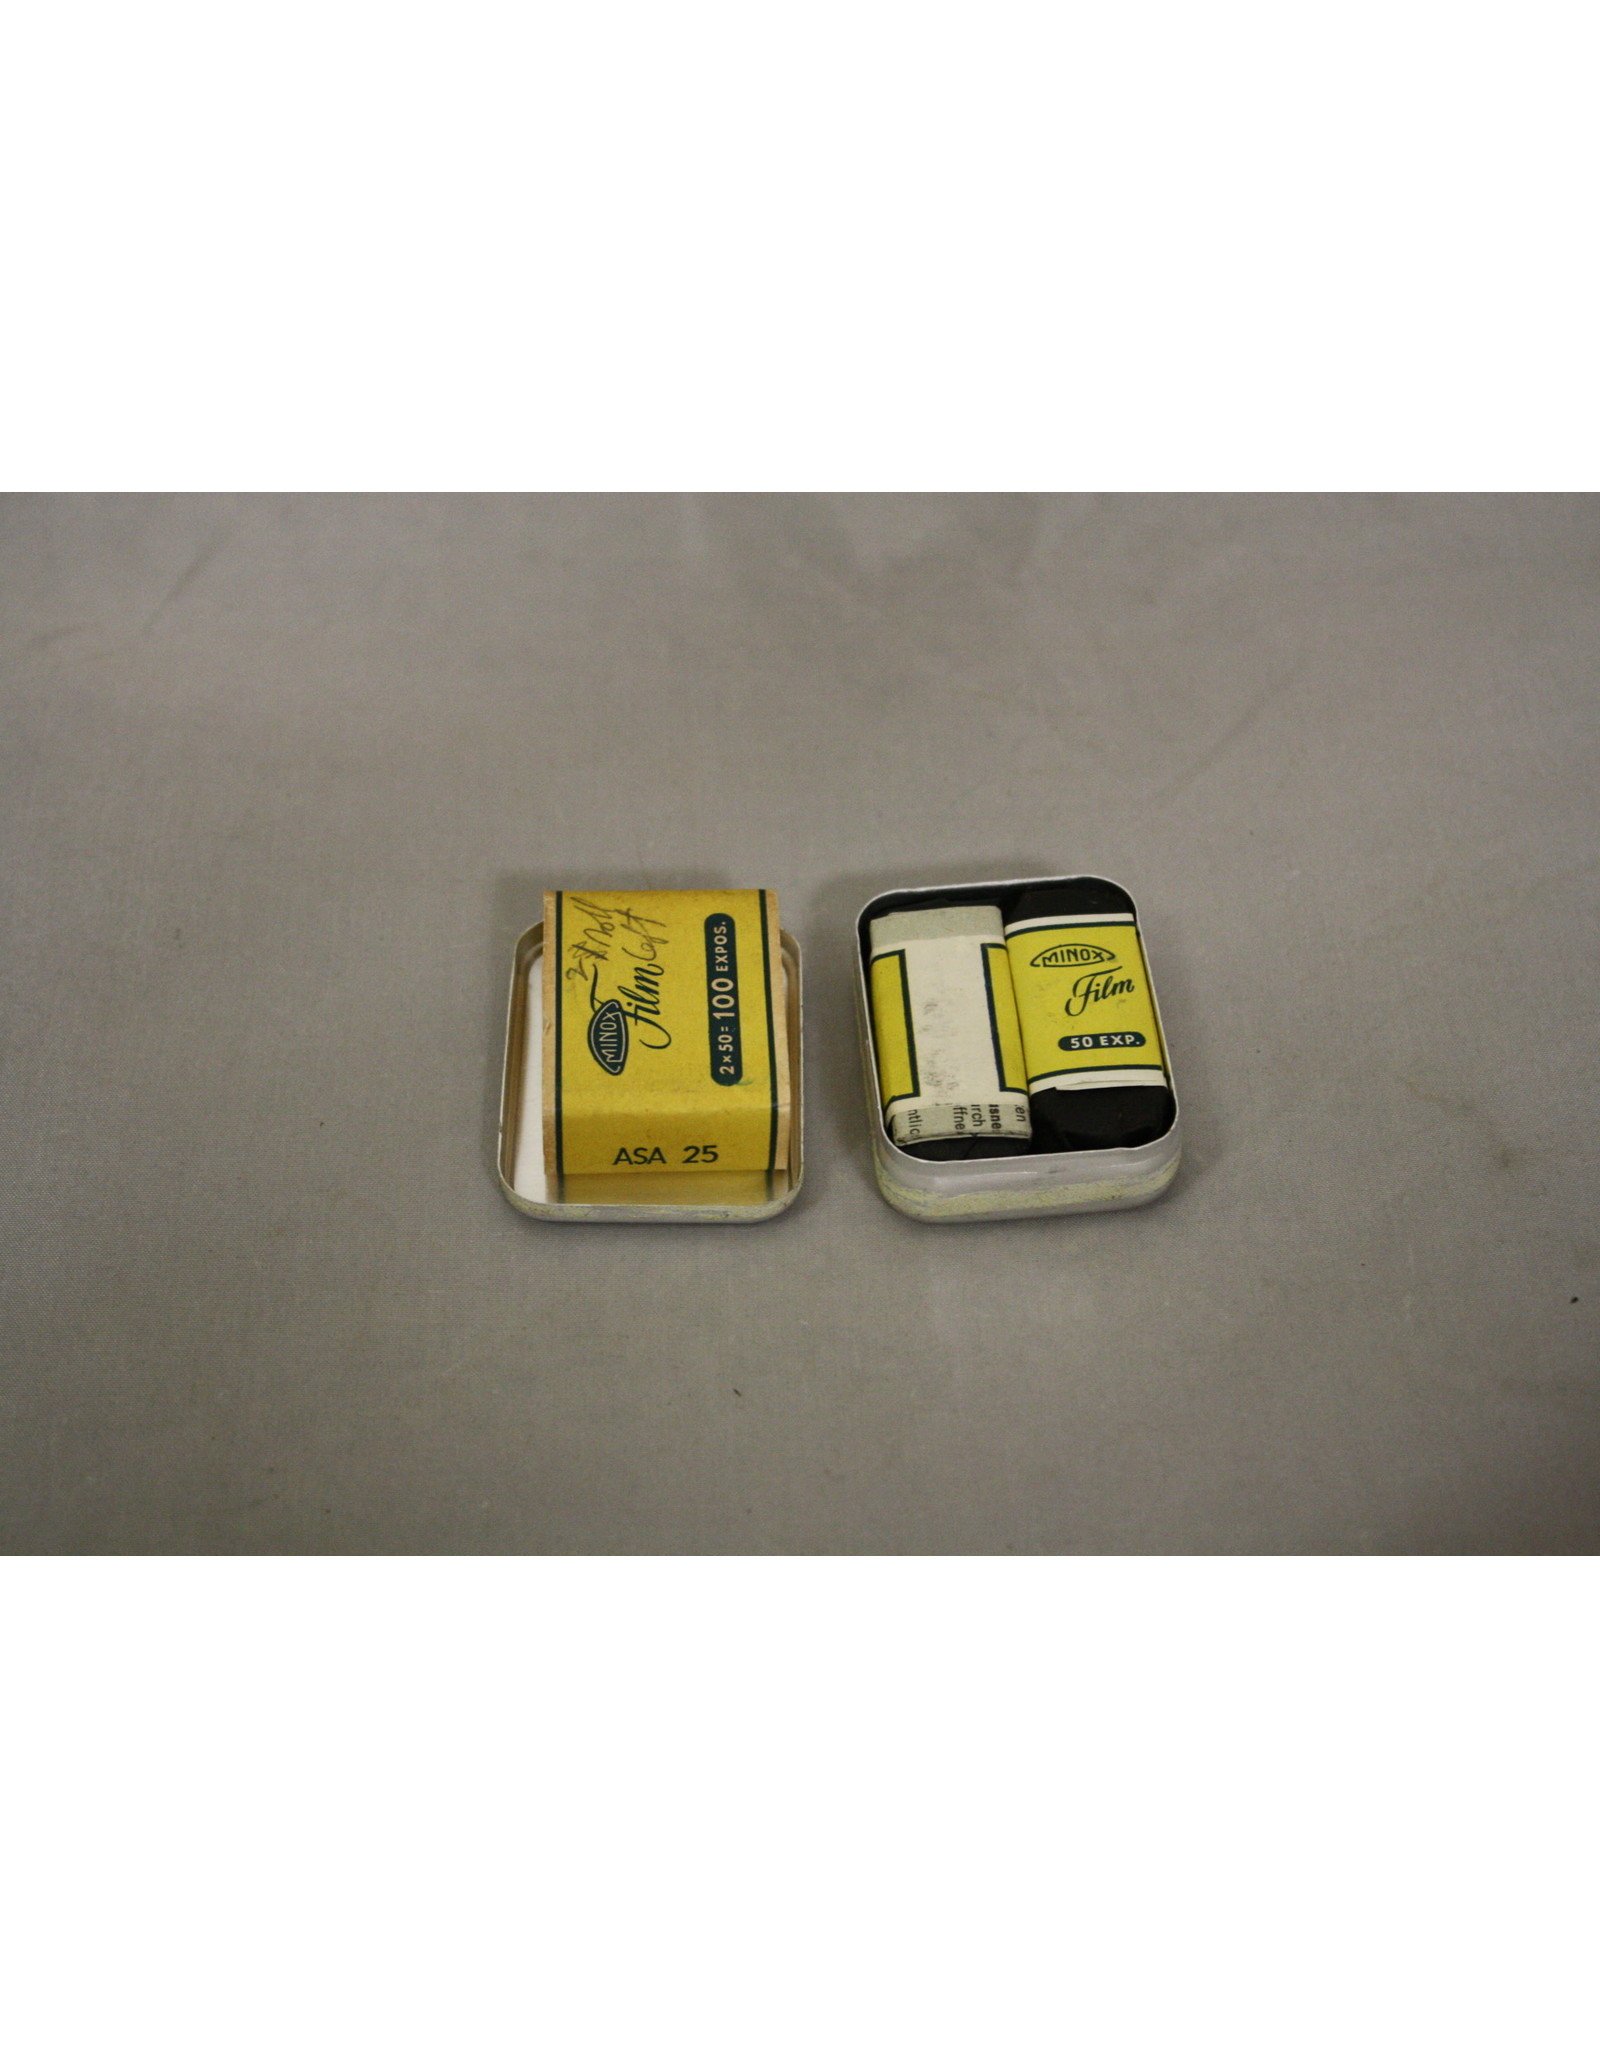 Minox Vintage MINOX B Miniature Spy Camera W/ Accessories Manual++++(FULLY TESTED) (Pre-owned)